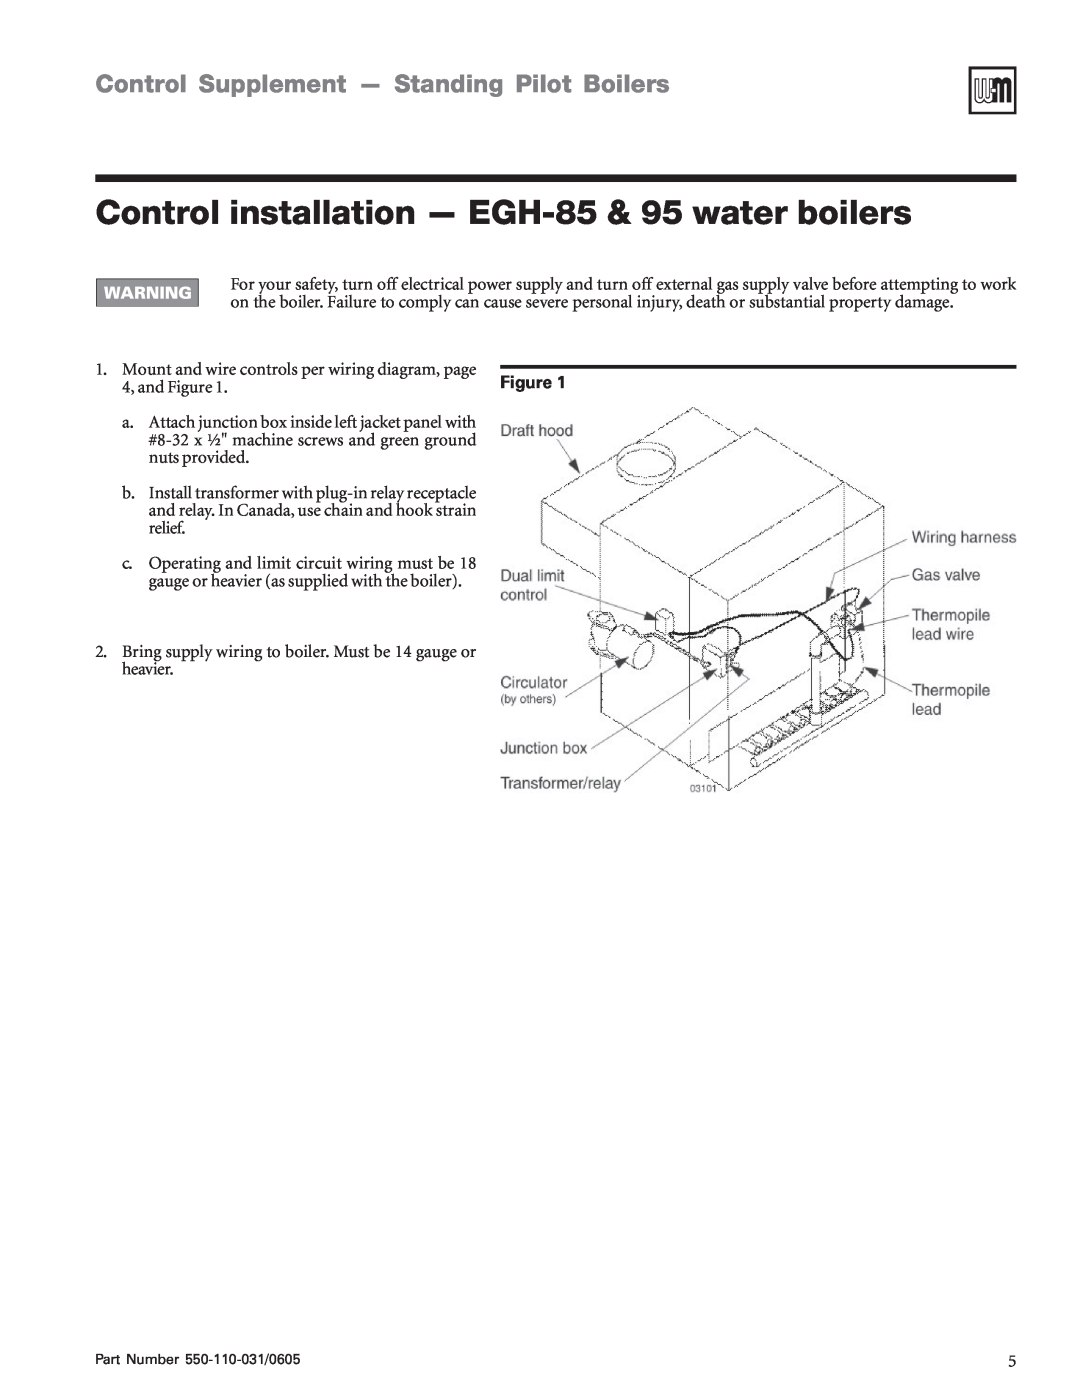 Weil-McLain PFG-6, EGH-95 Control installation - EGH-85& 95 water boilers, Control Supplement - Standing Pilot Boilers 